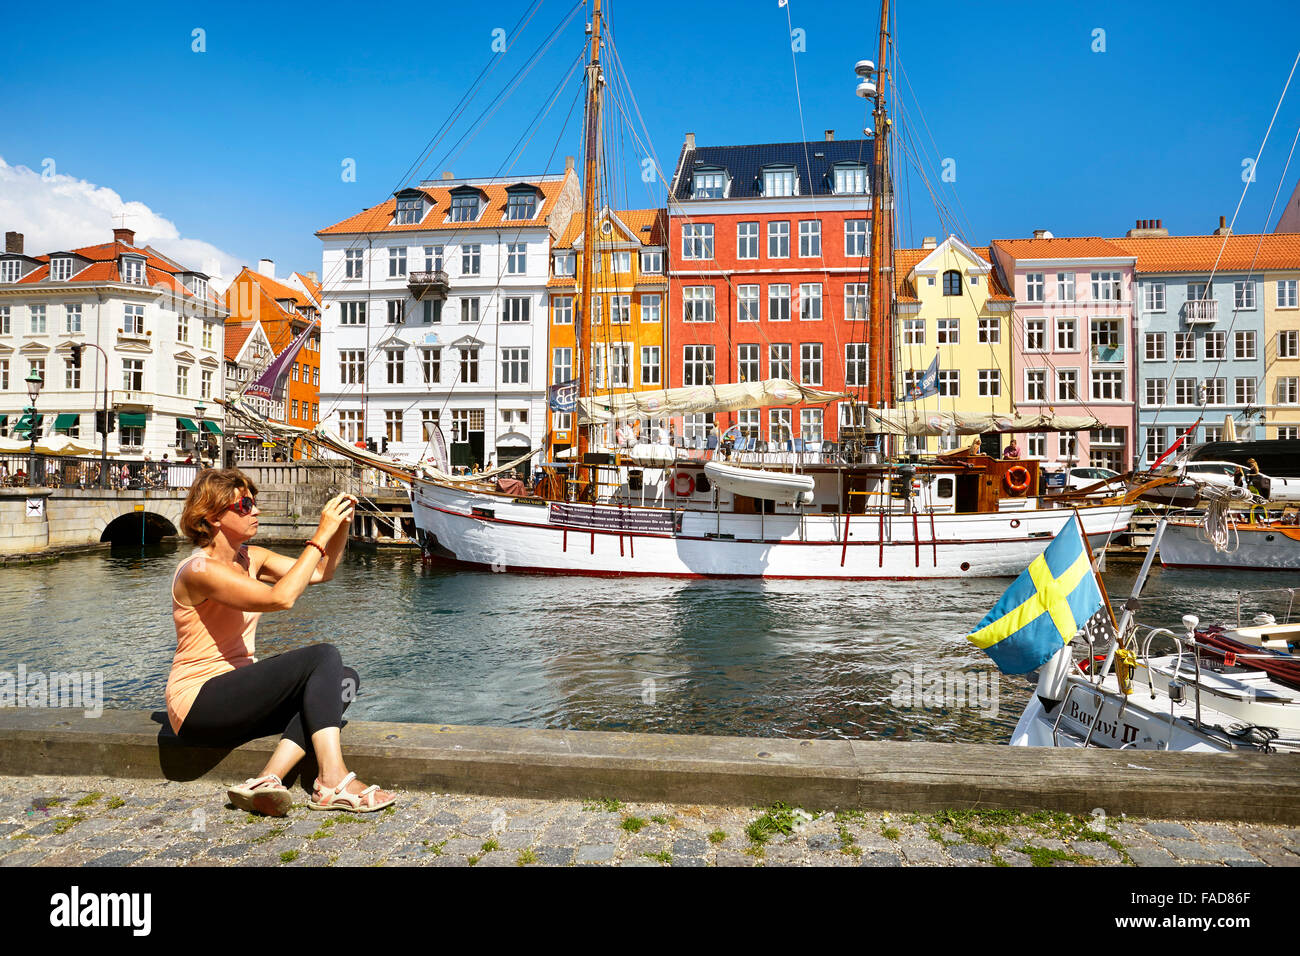 Nyhavn Canal, Copenhagen old town, Denmark Stock Photo